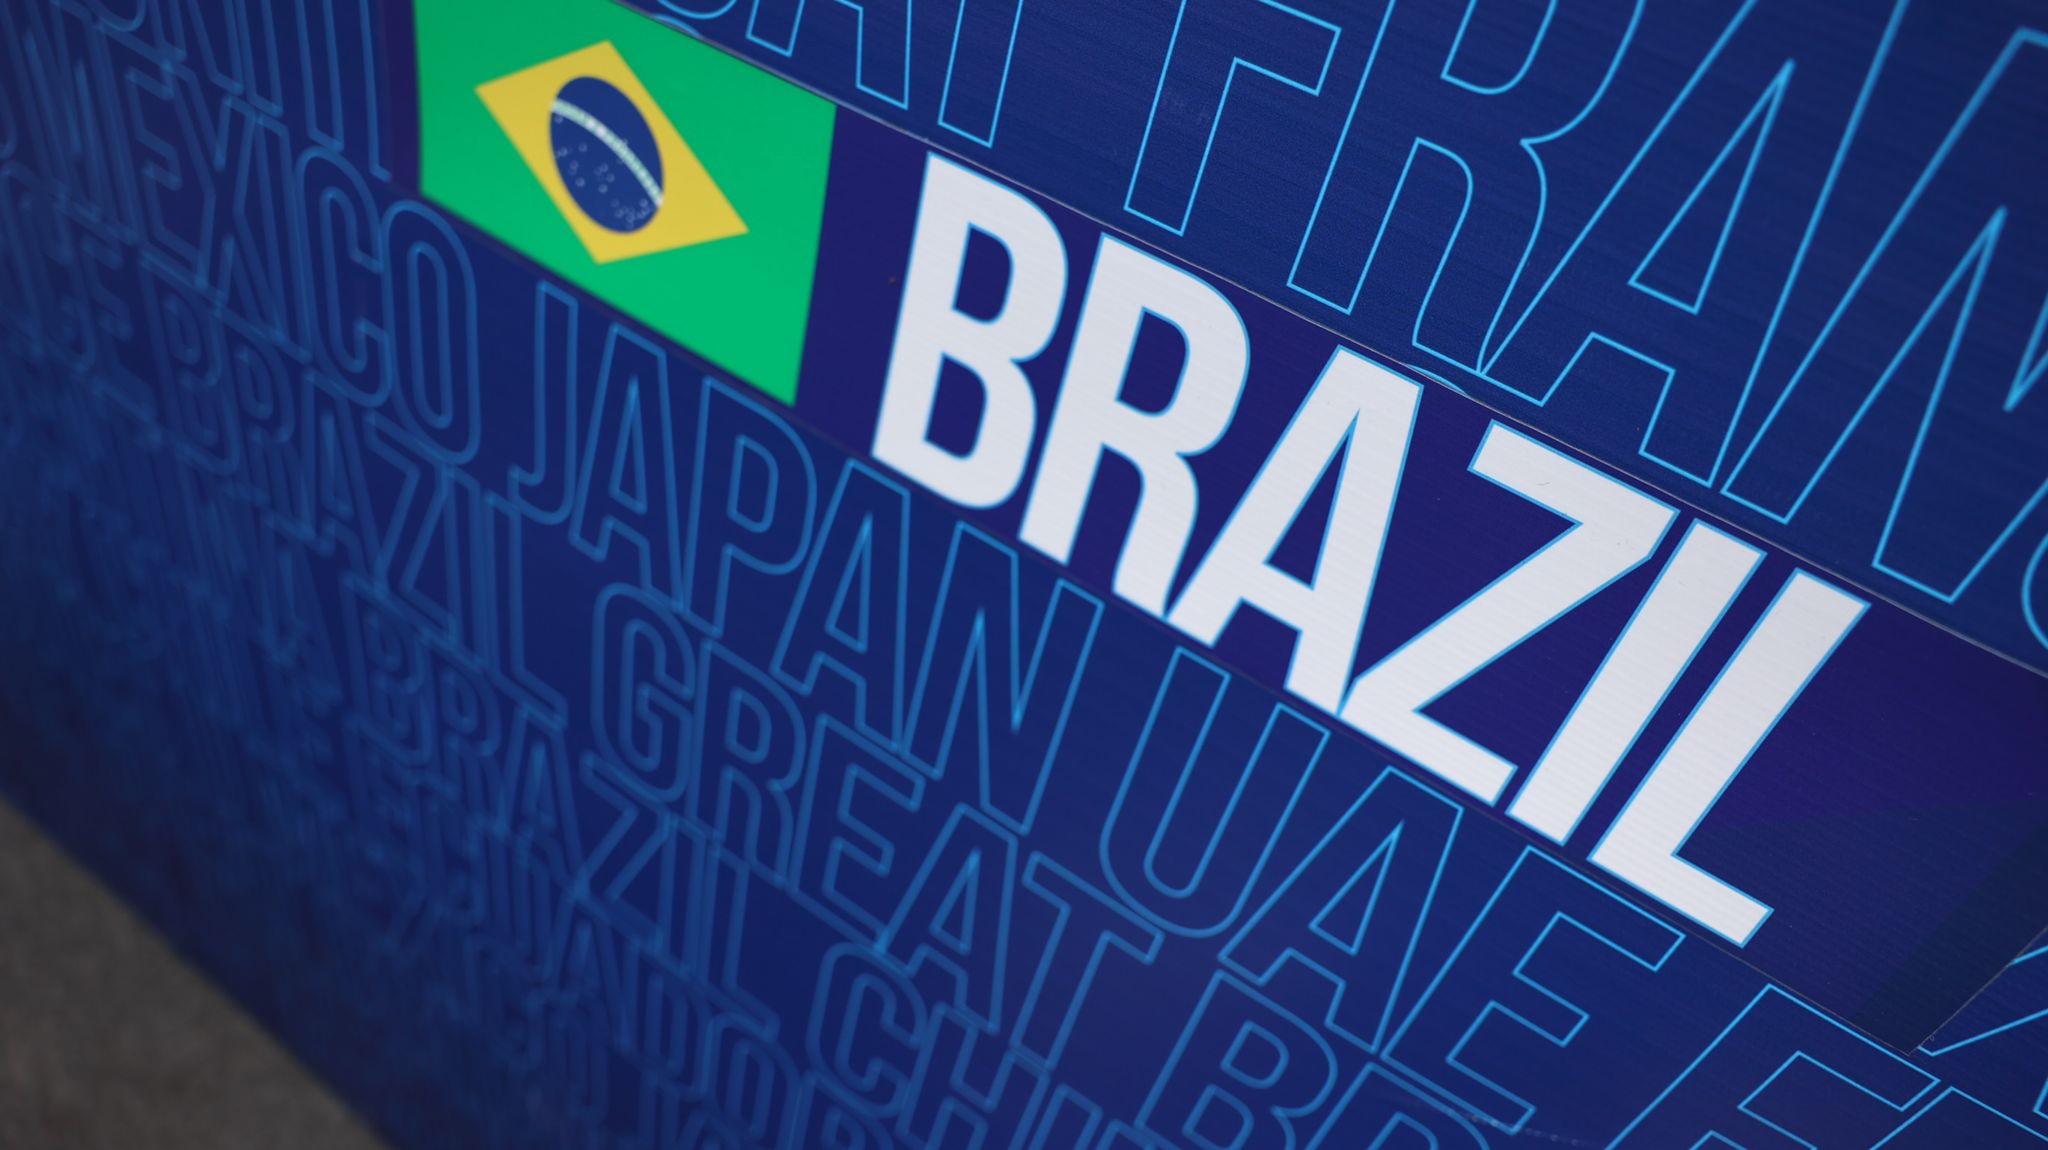 Brésil photo panneau Mondial 2022 Dubai